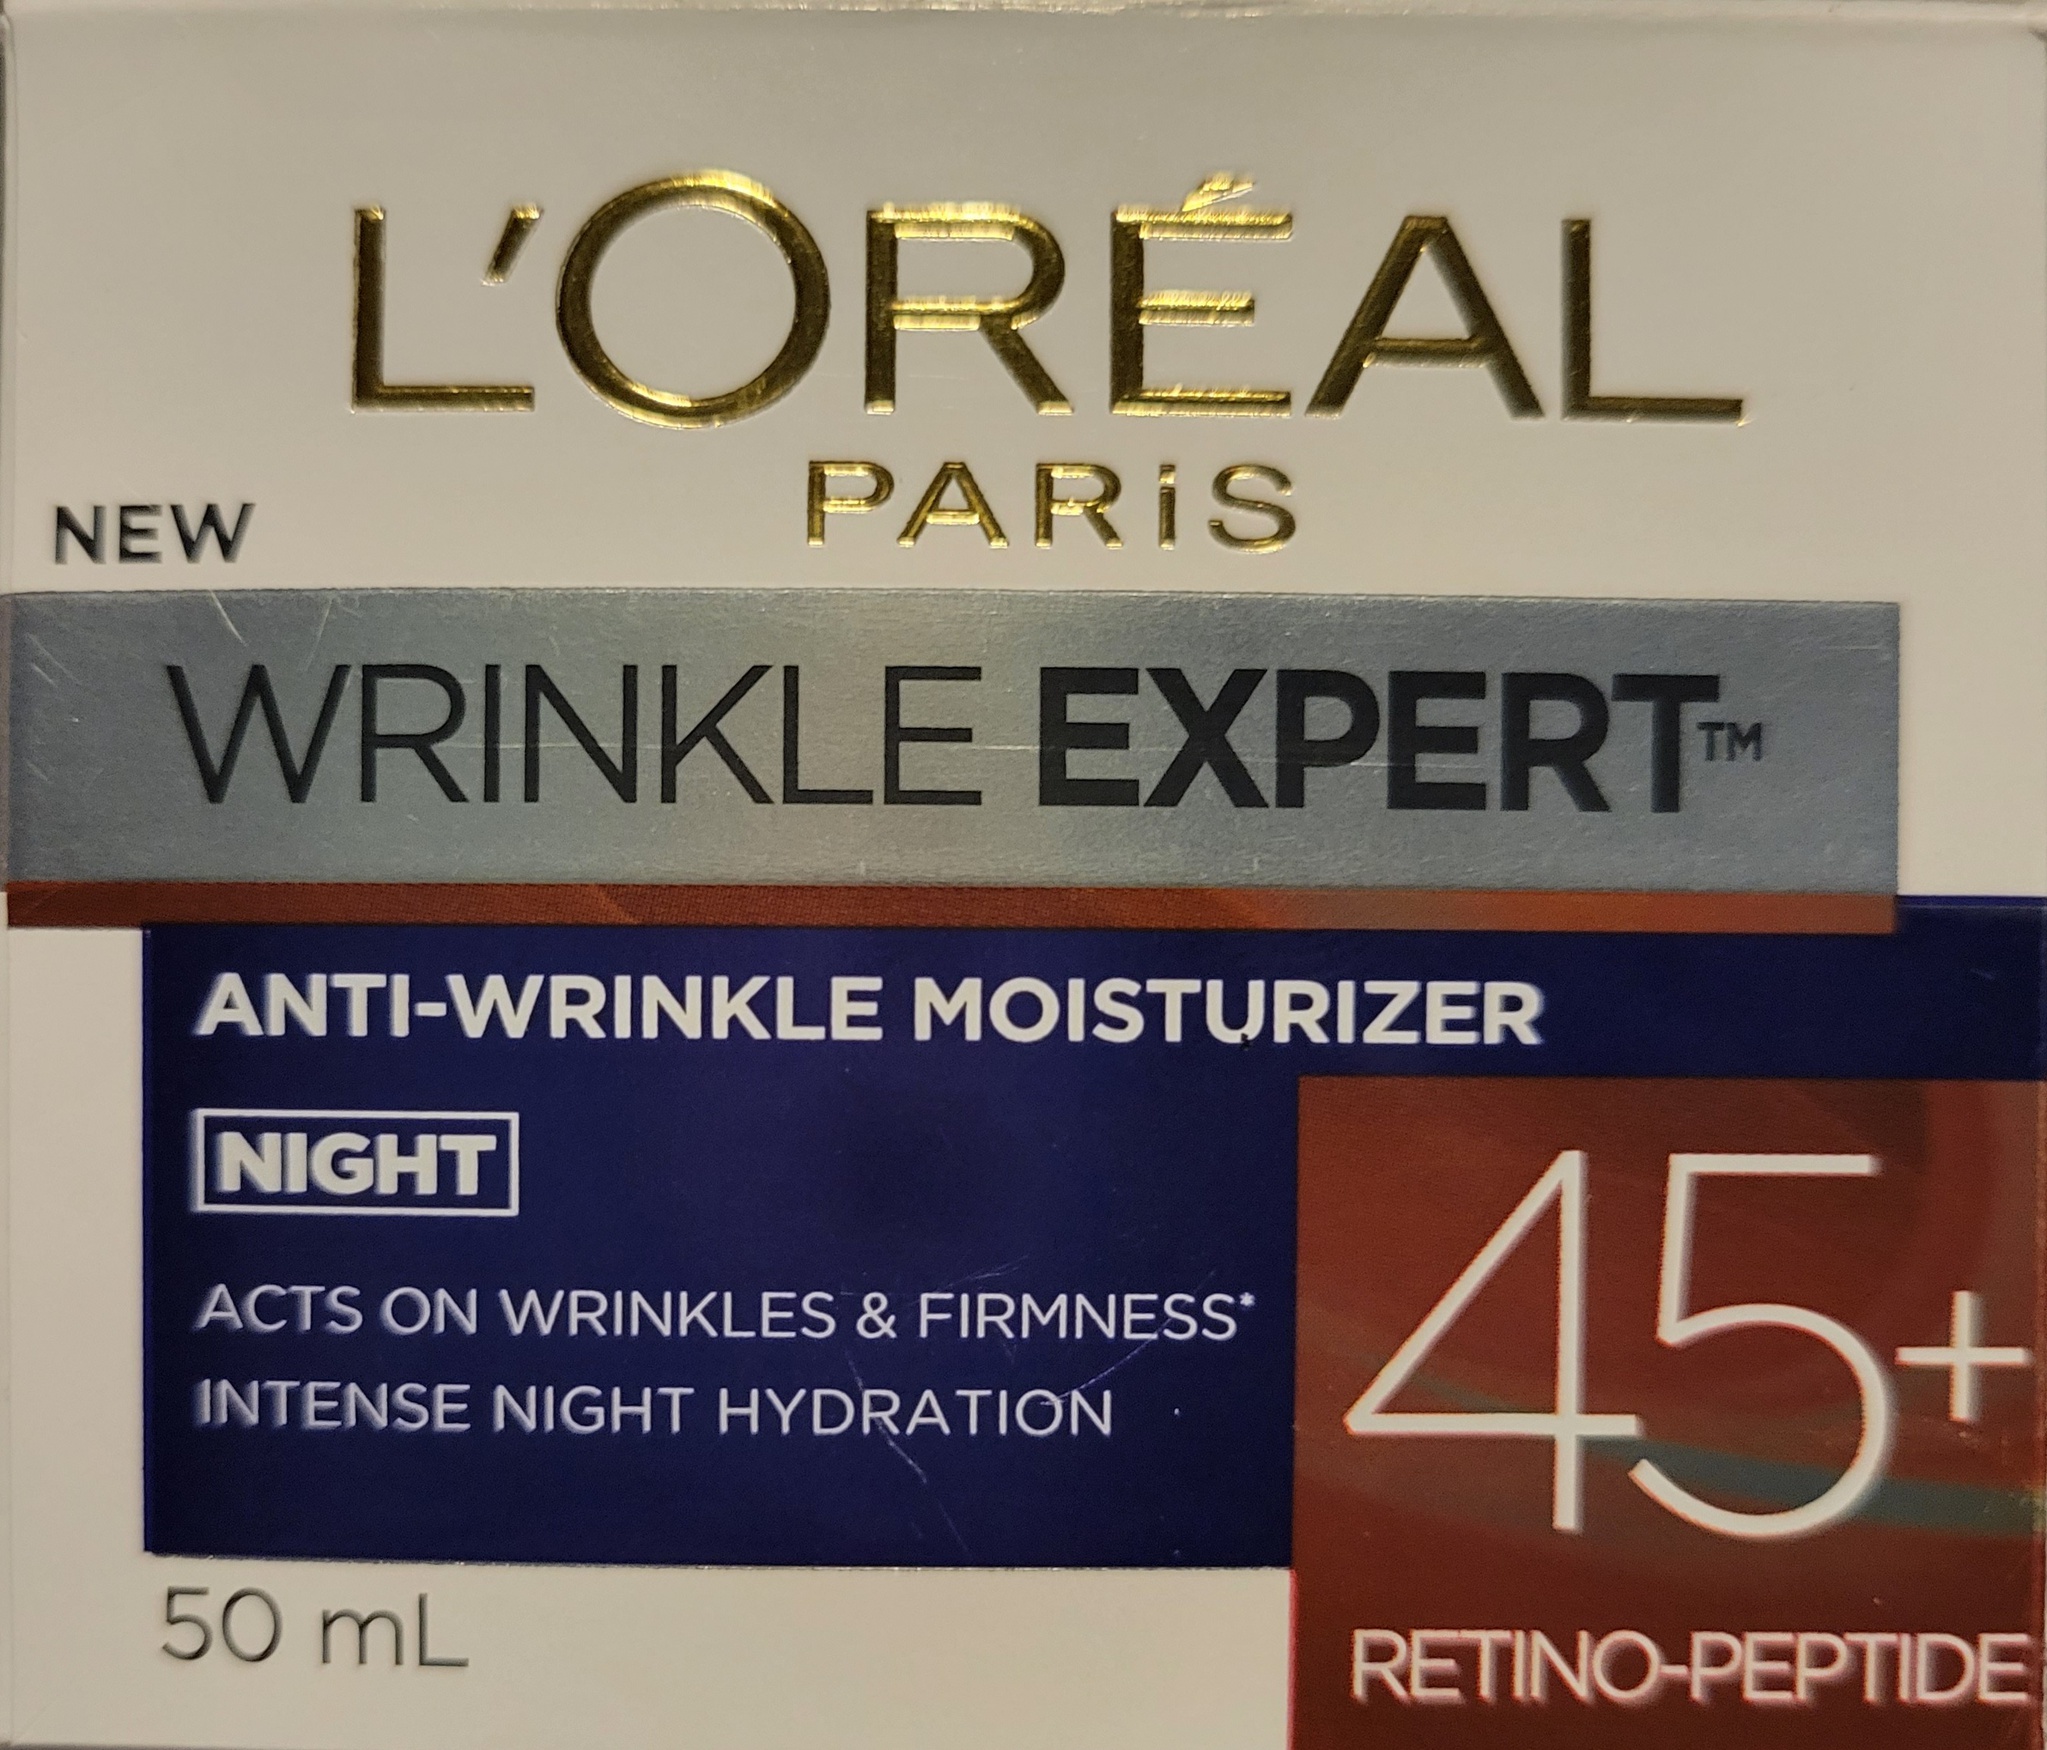 L'Oreal Paris Wrinkle Expert Anti-wrinkle Moisturizer 45+ Night